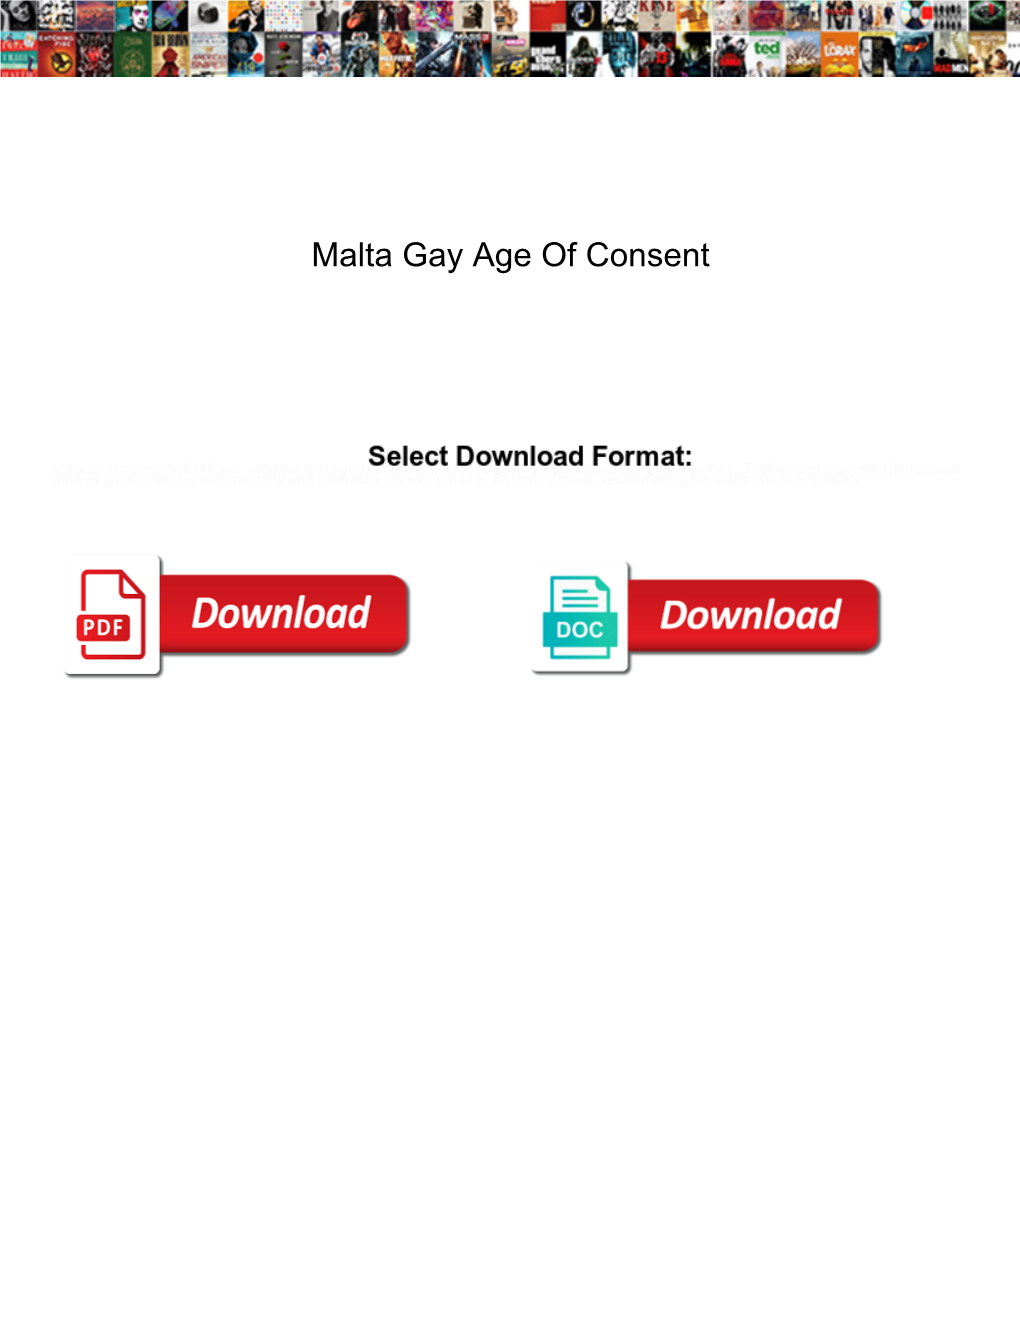 Malta Gay Age of Consent